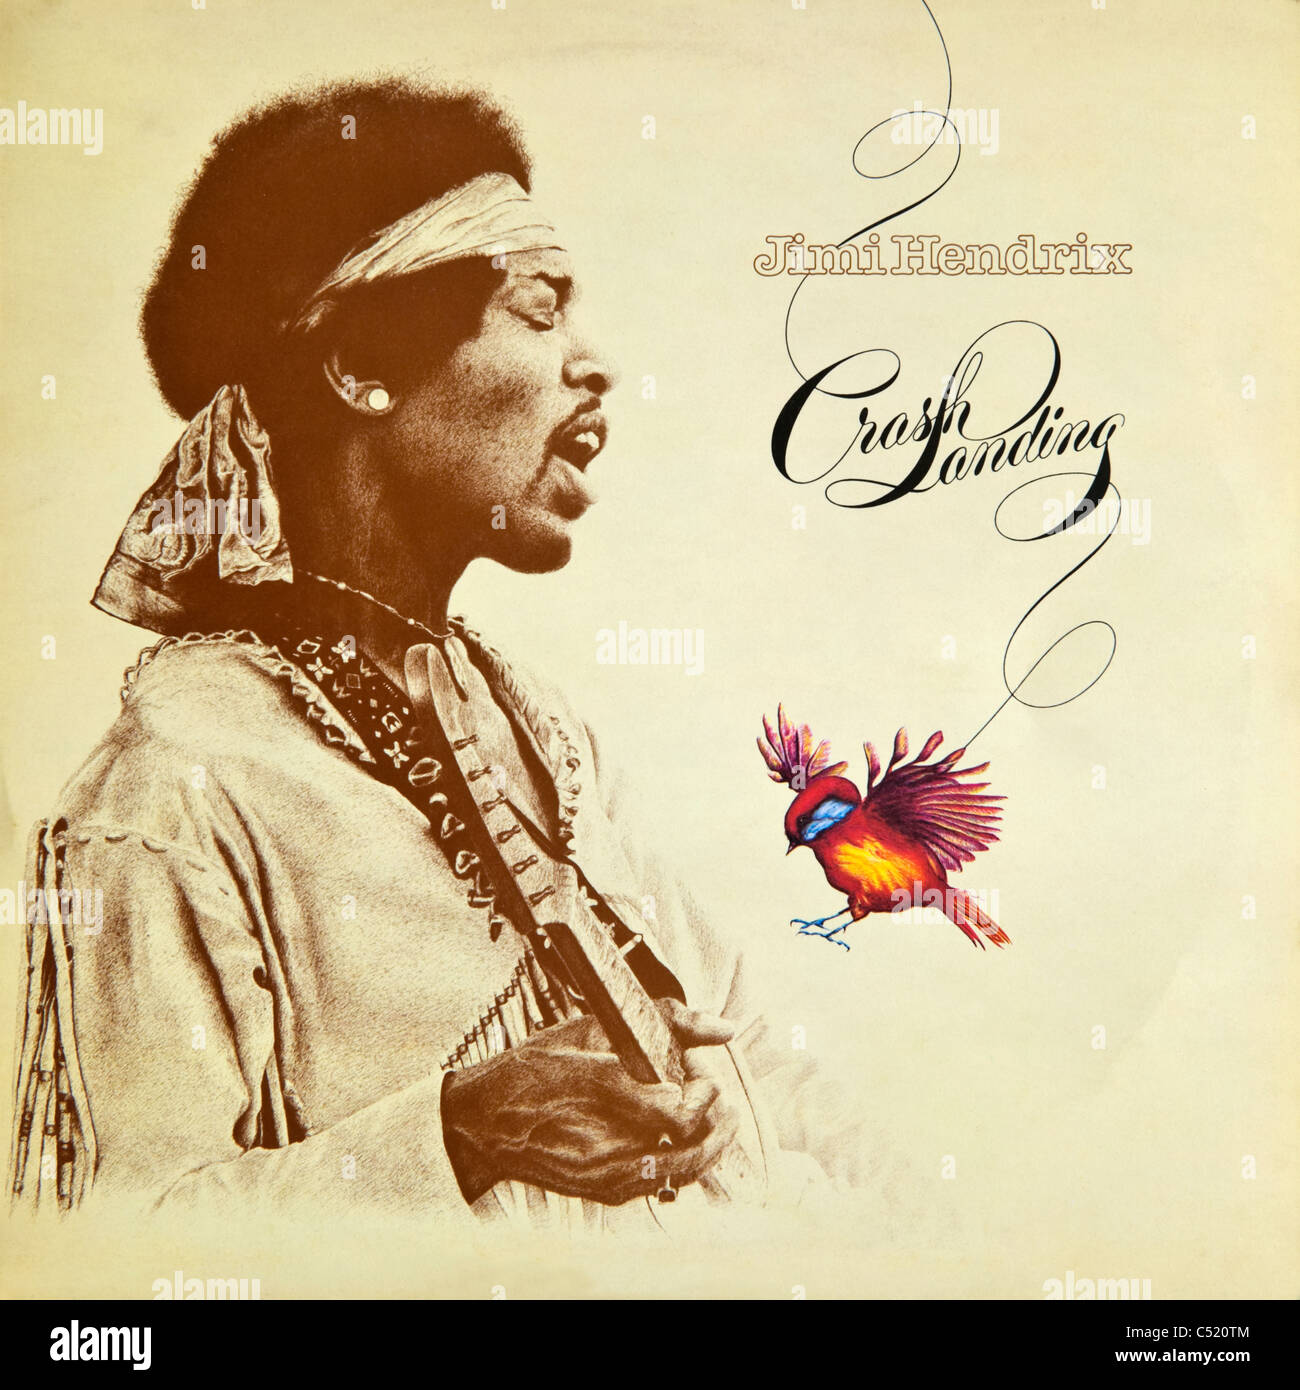 Cover of vinyl album Crash Landing by Jimi Hendrix released 1975 on Polydor Records Stock Photo